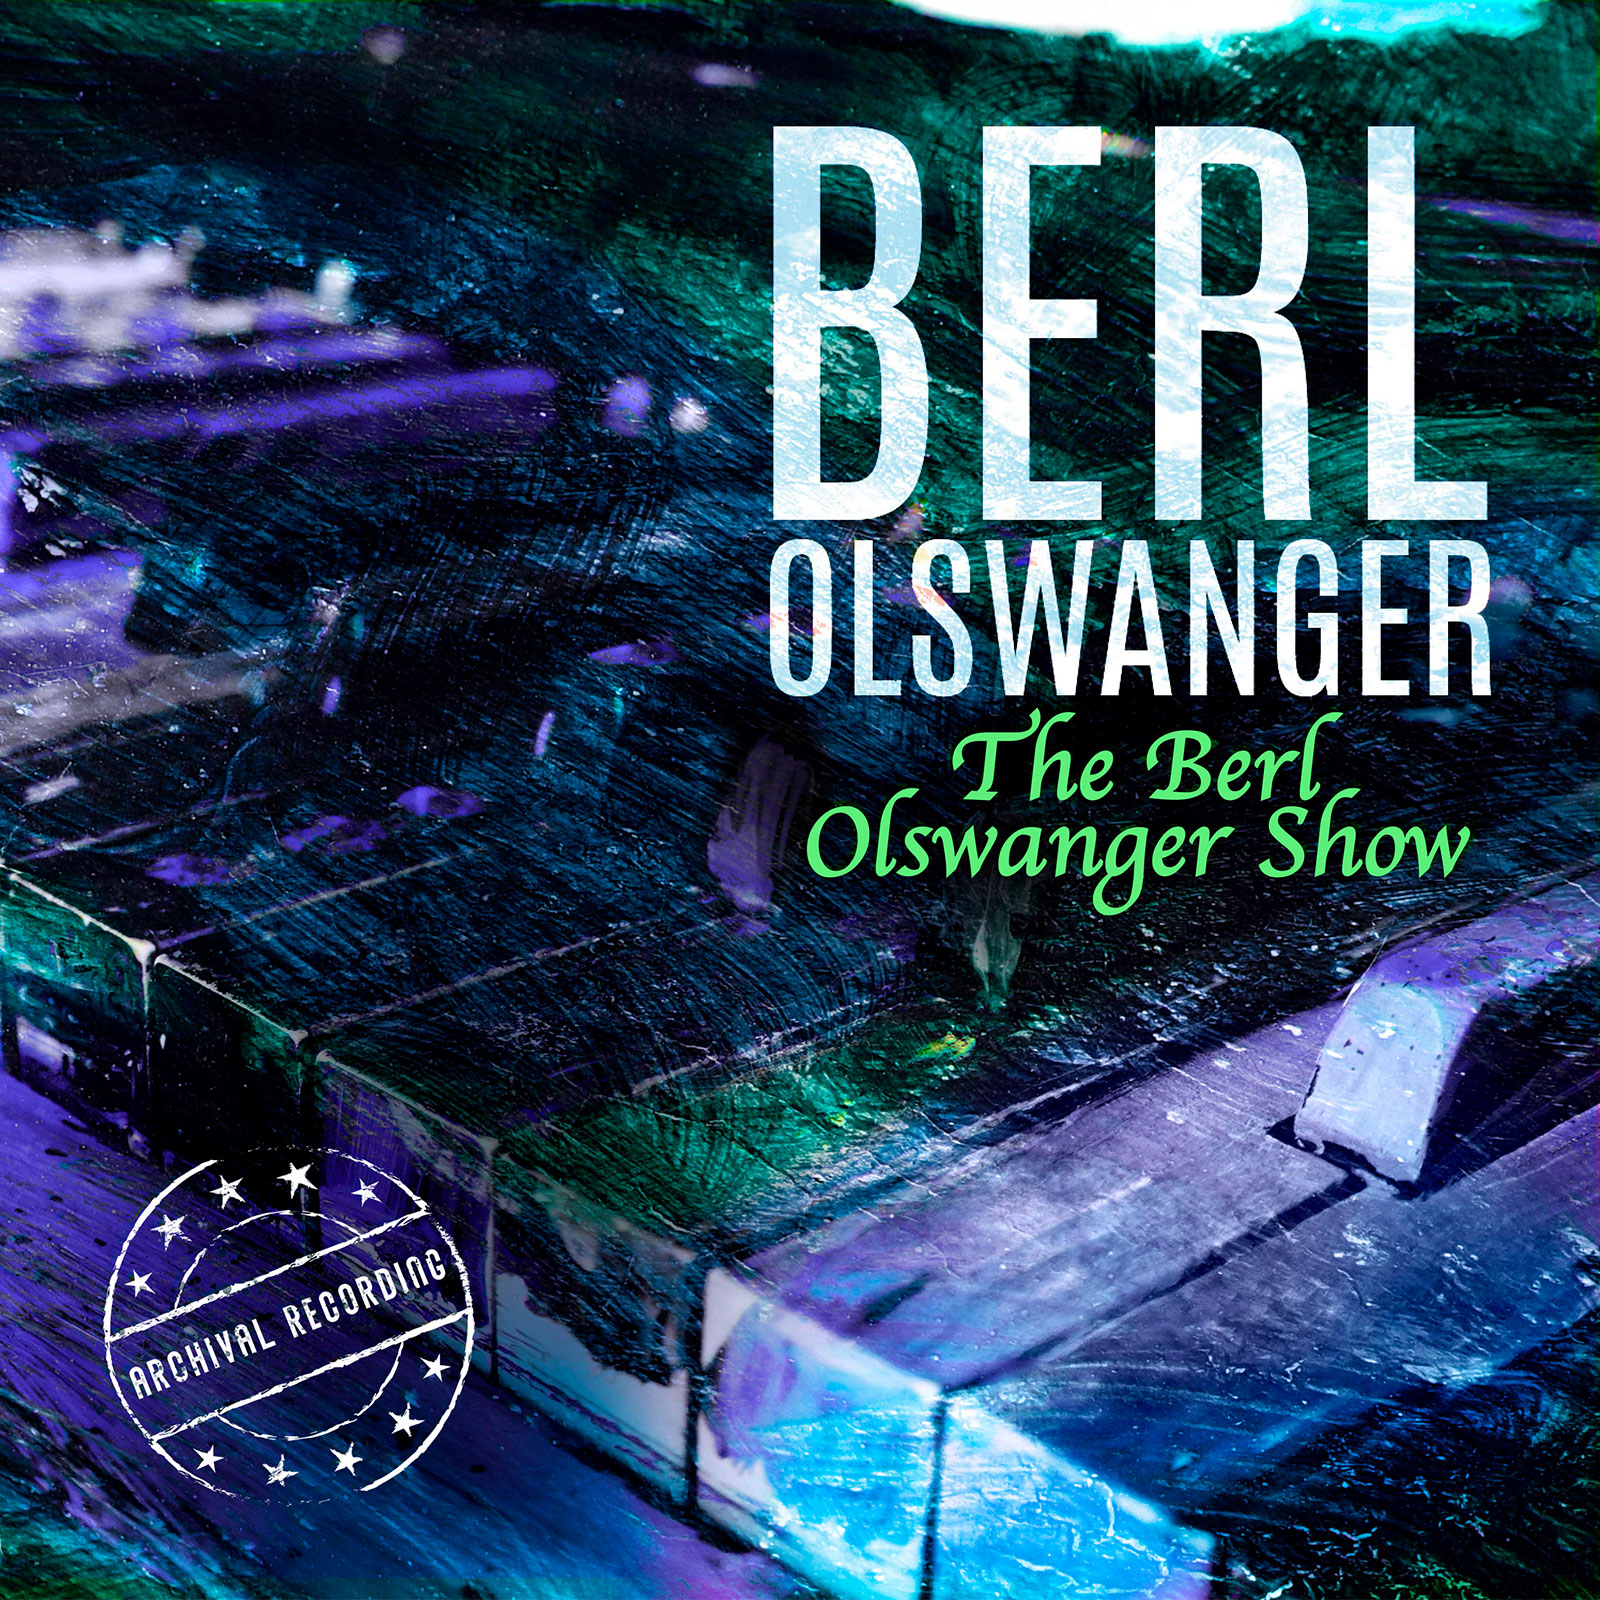 The Berl Olswanger Show